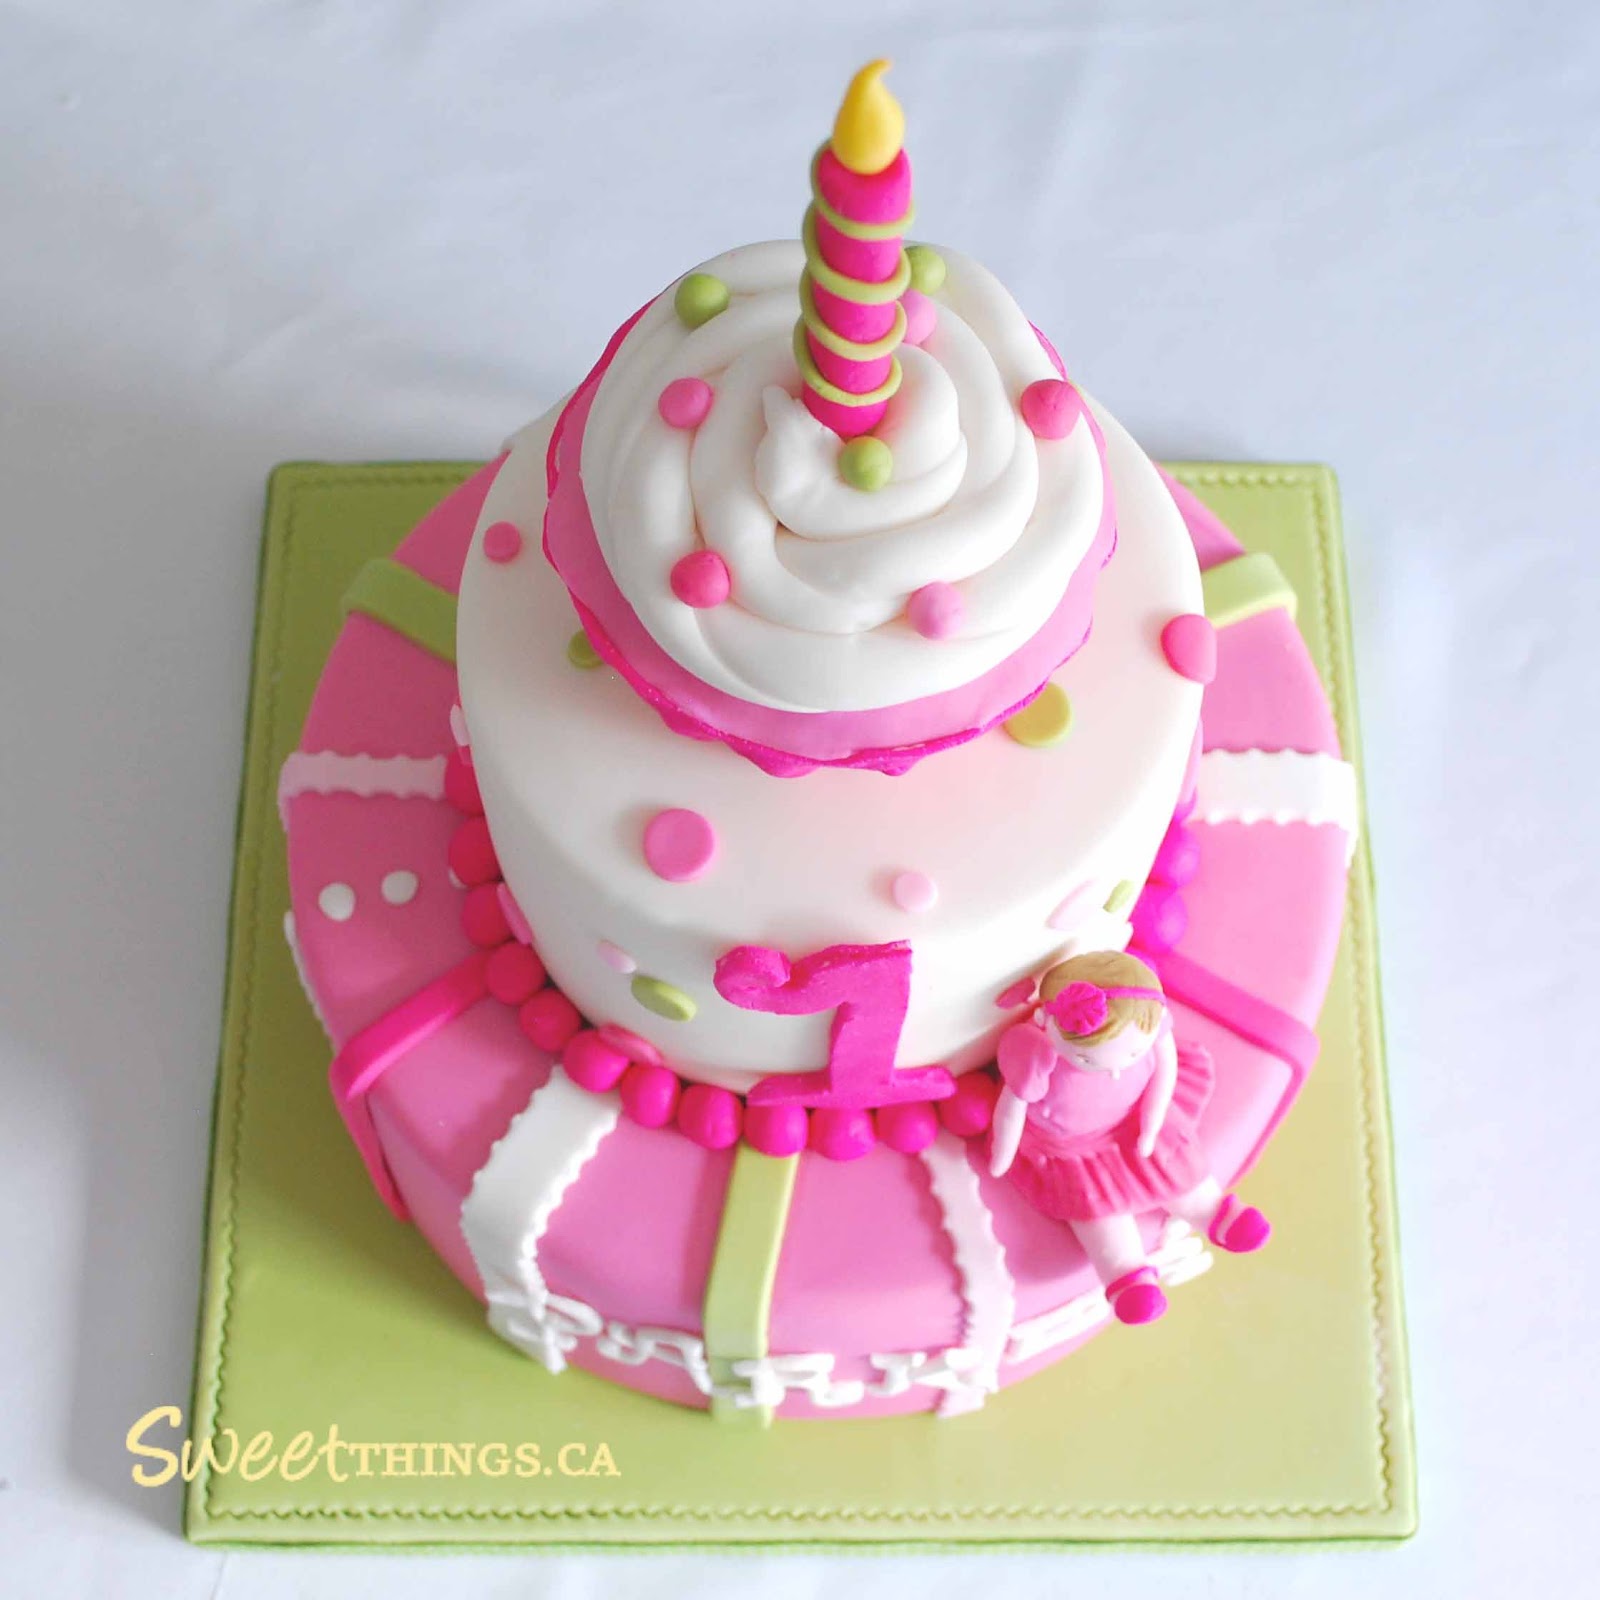 Colorful Buttercream Birthday Cakes Girls